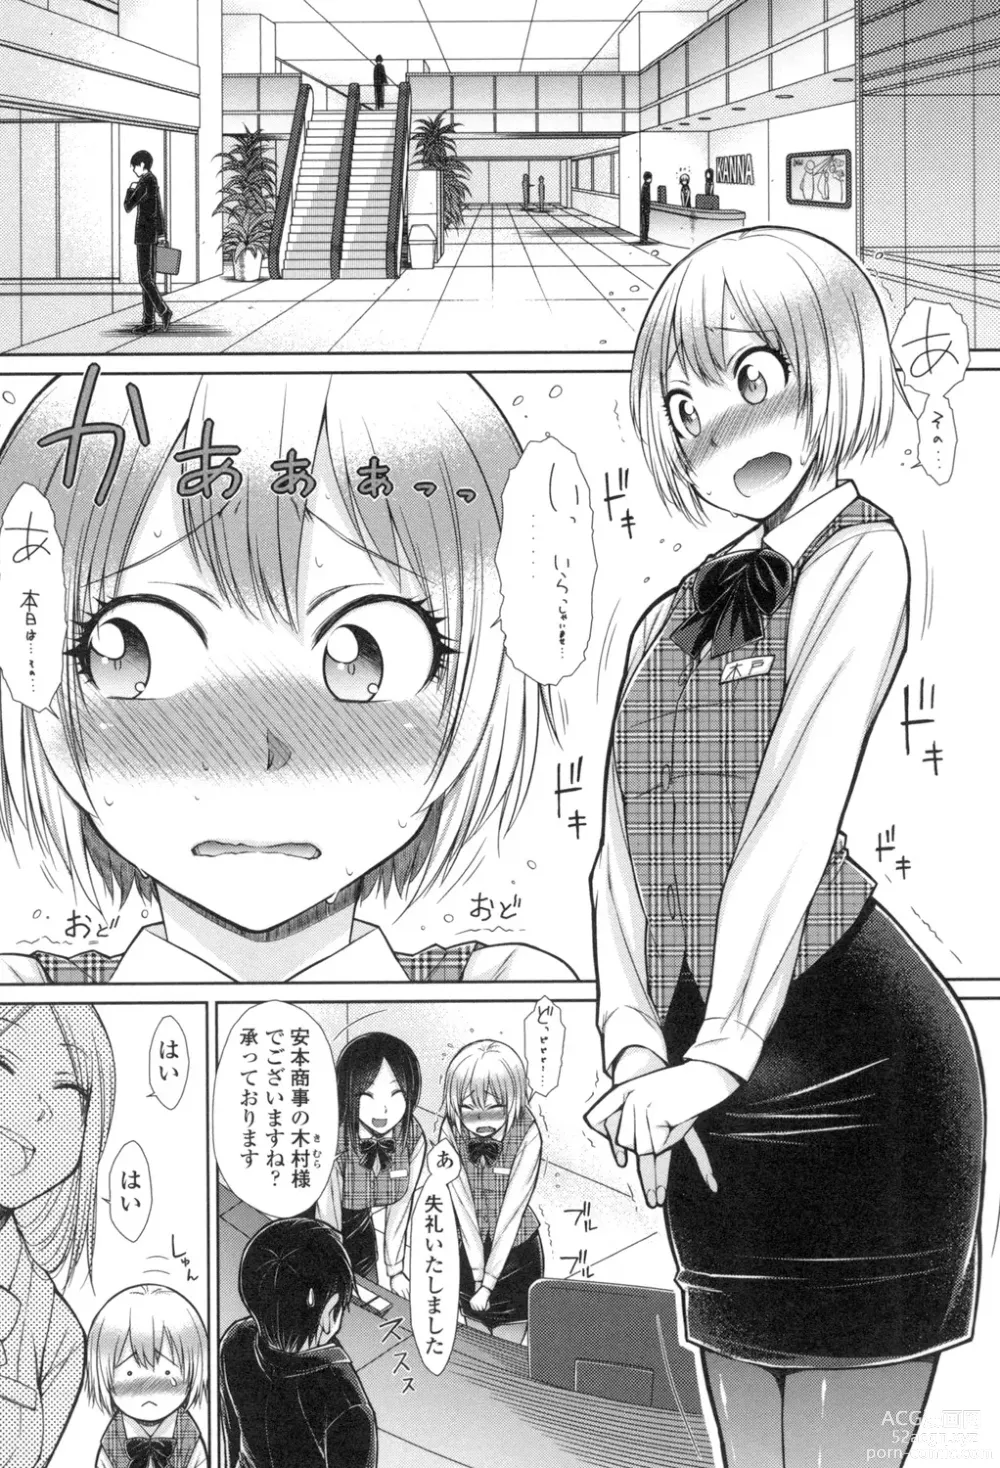 Page 28 of manga Kochira Joshi Shain Senyou Seishorika - Sex Industry Division for Womens Employees Dedicated